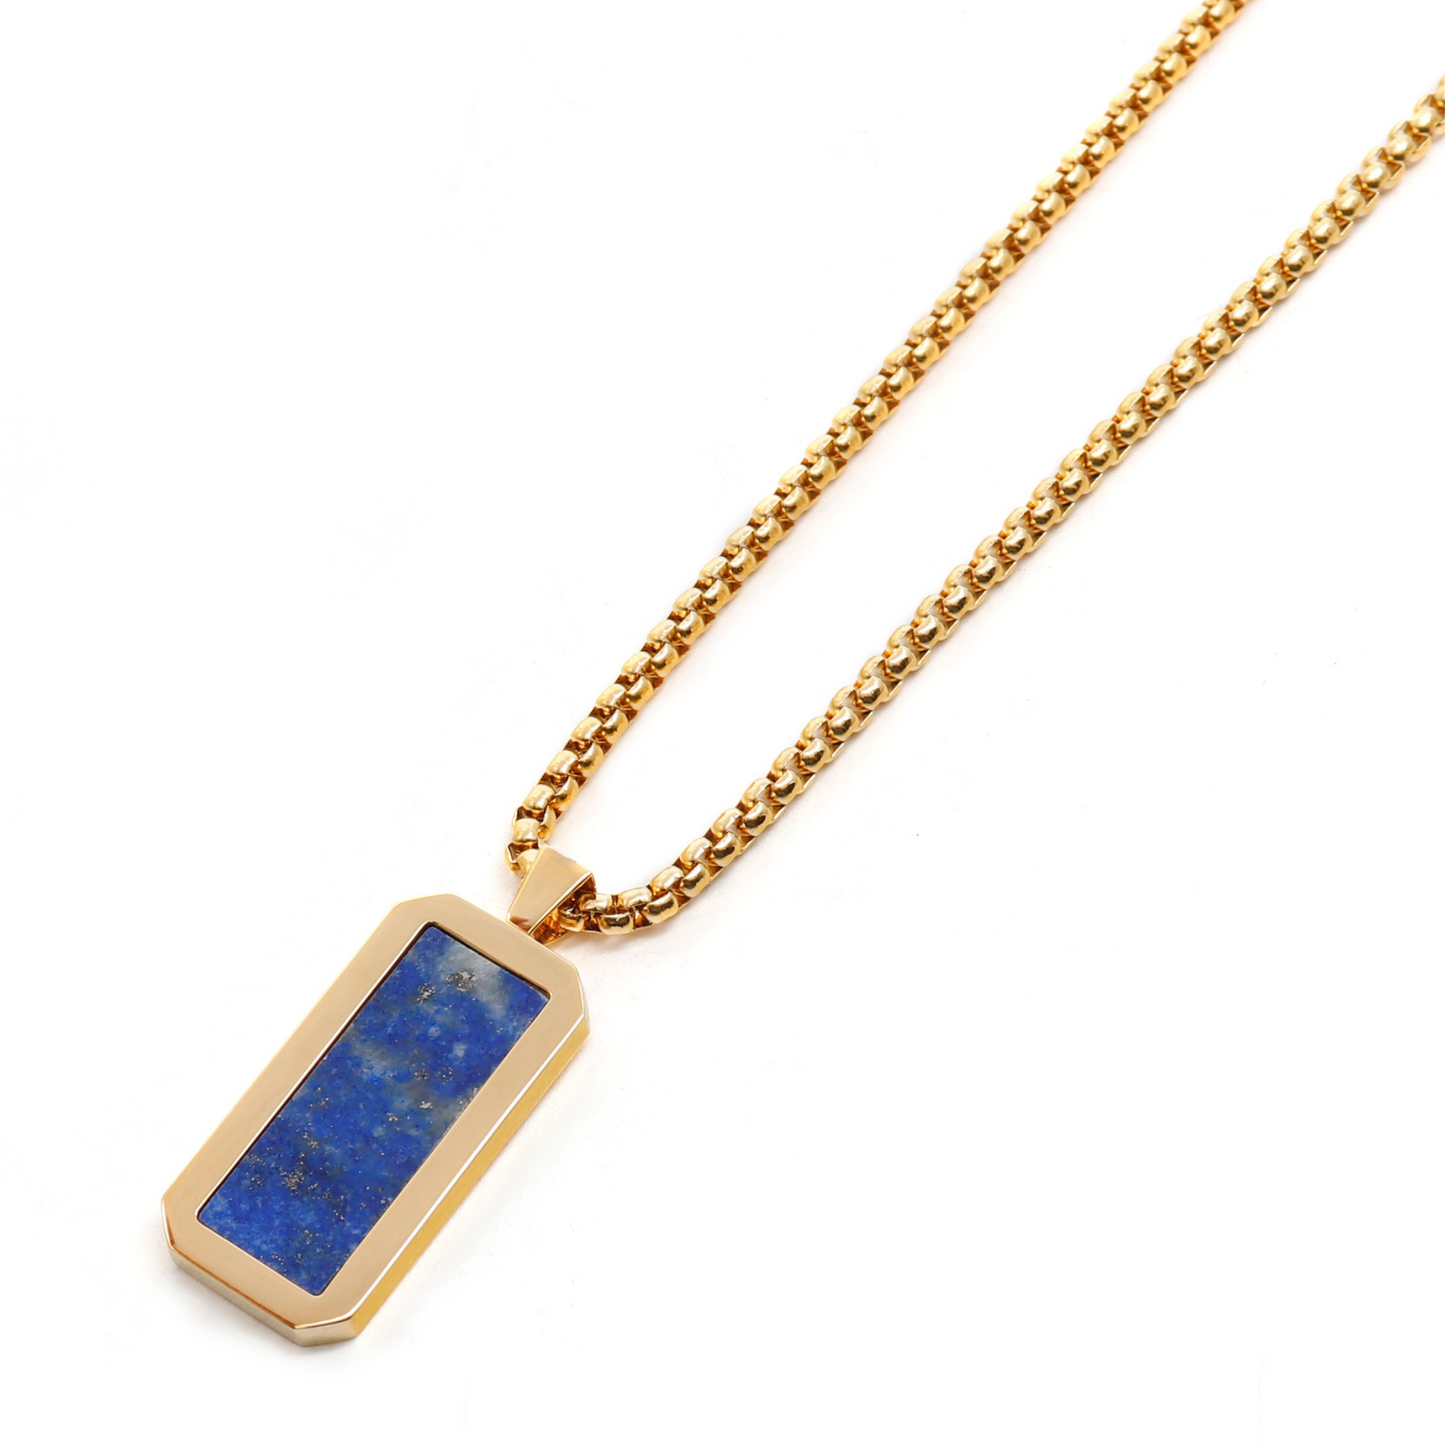 Golden Necklace with Rectangle Lapis Lazuli Pendant